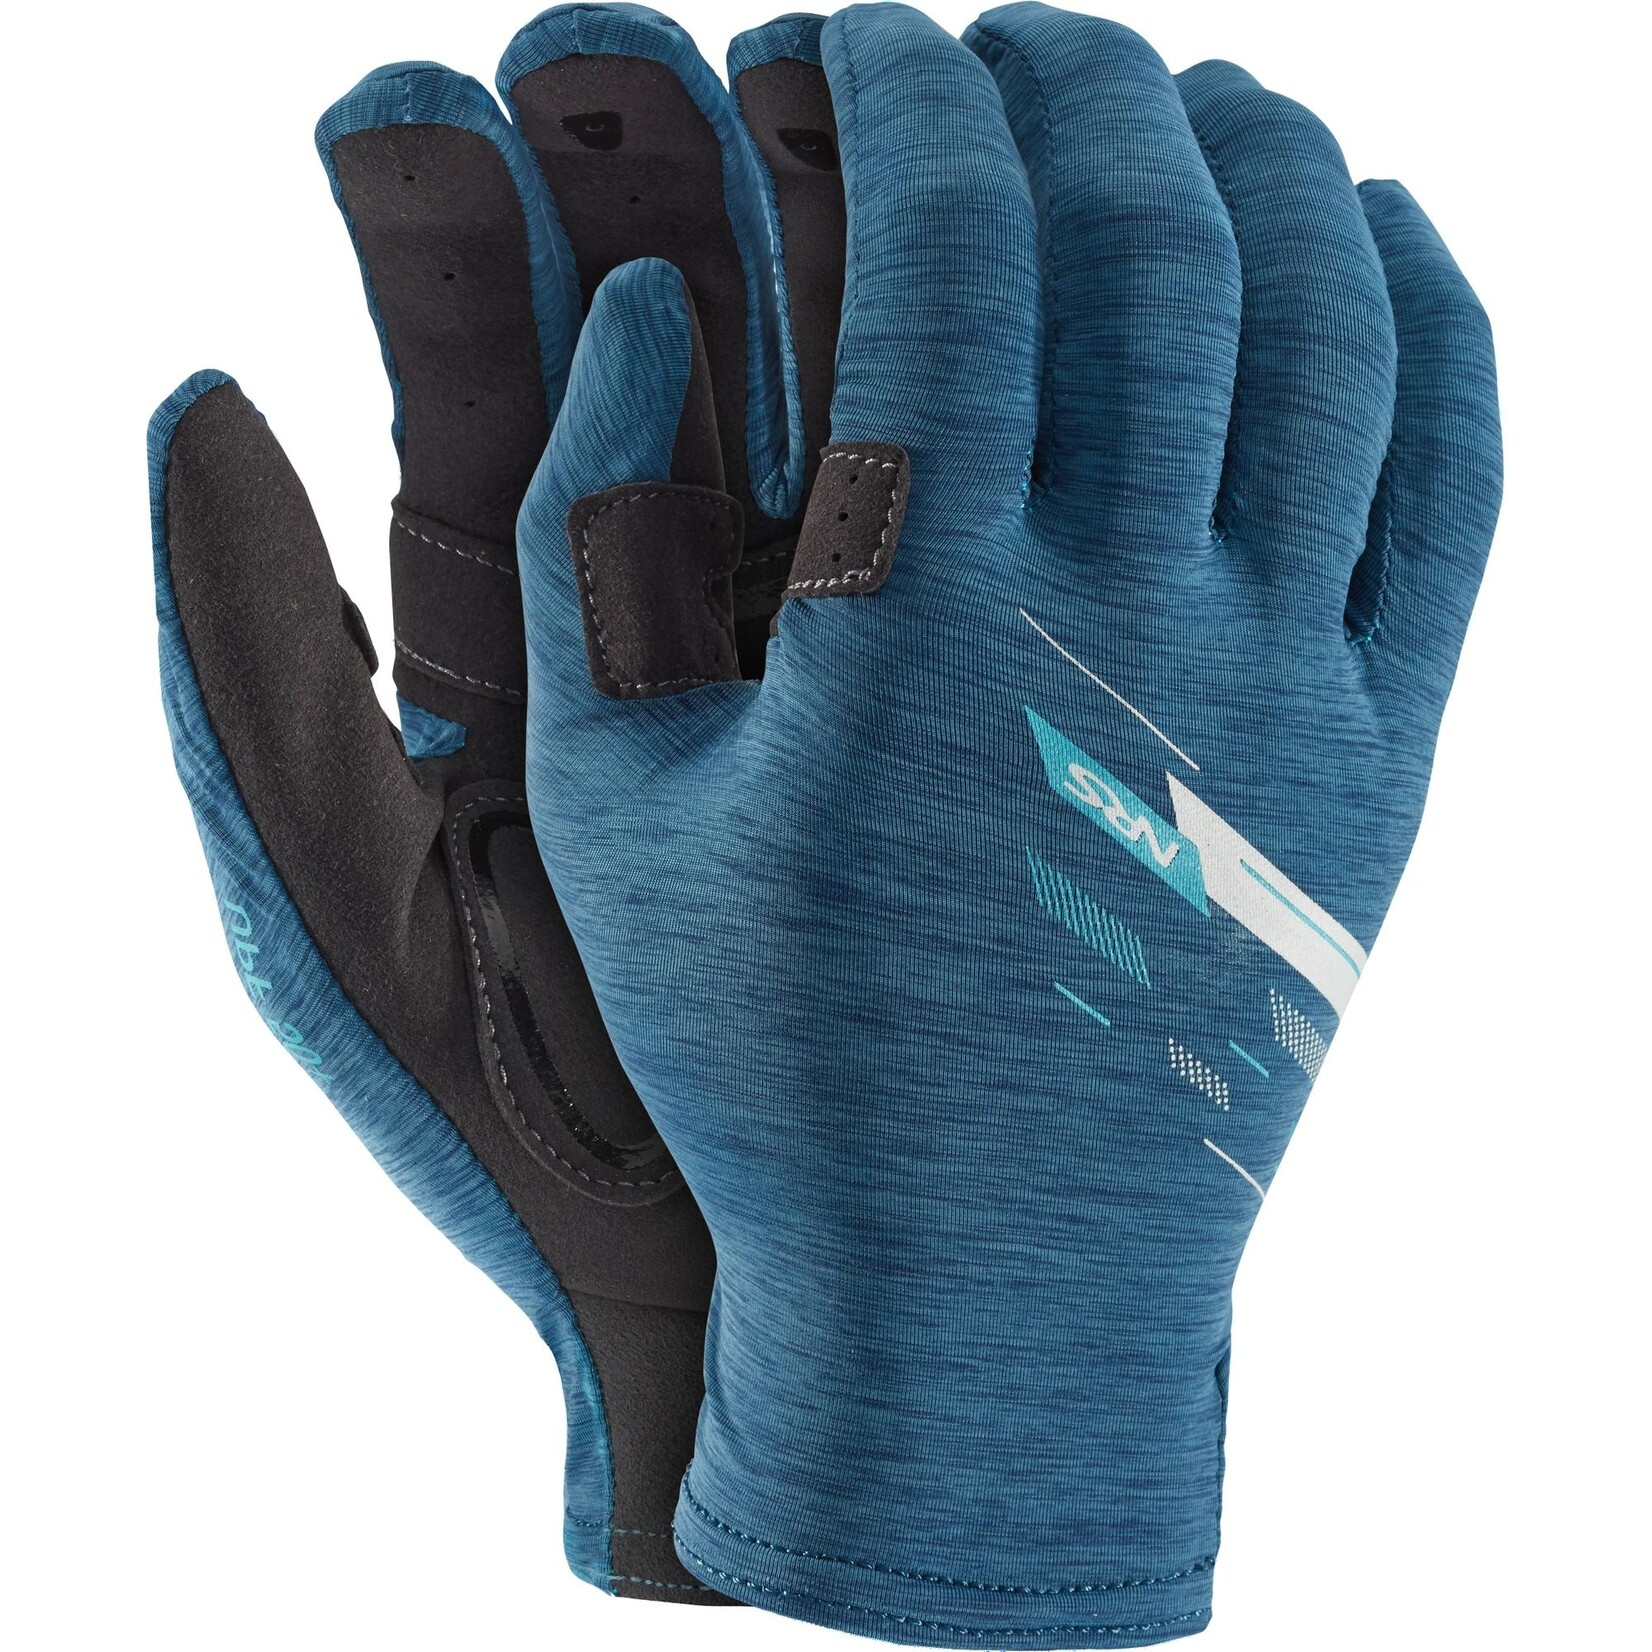 NRS Cove Gloves, Poseidon